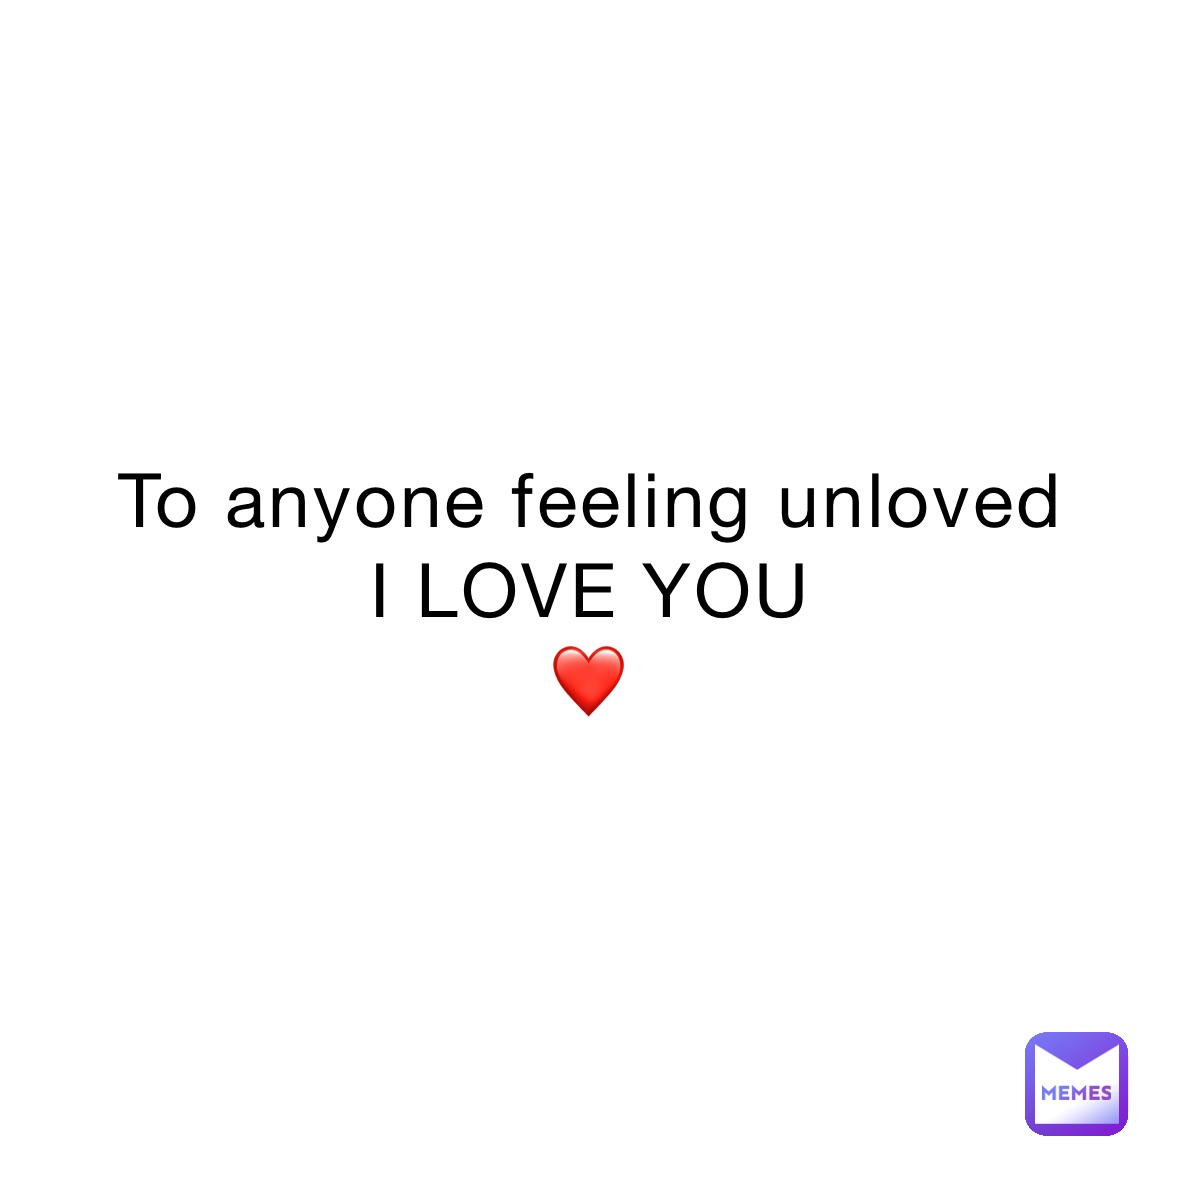 To anyone feeling unloved
I LOVE YOU 
❤️